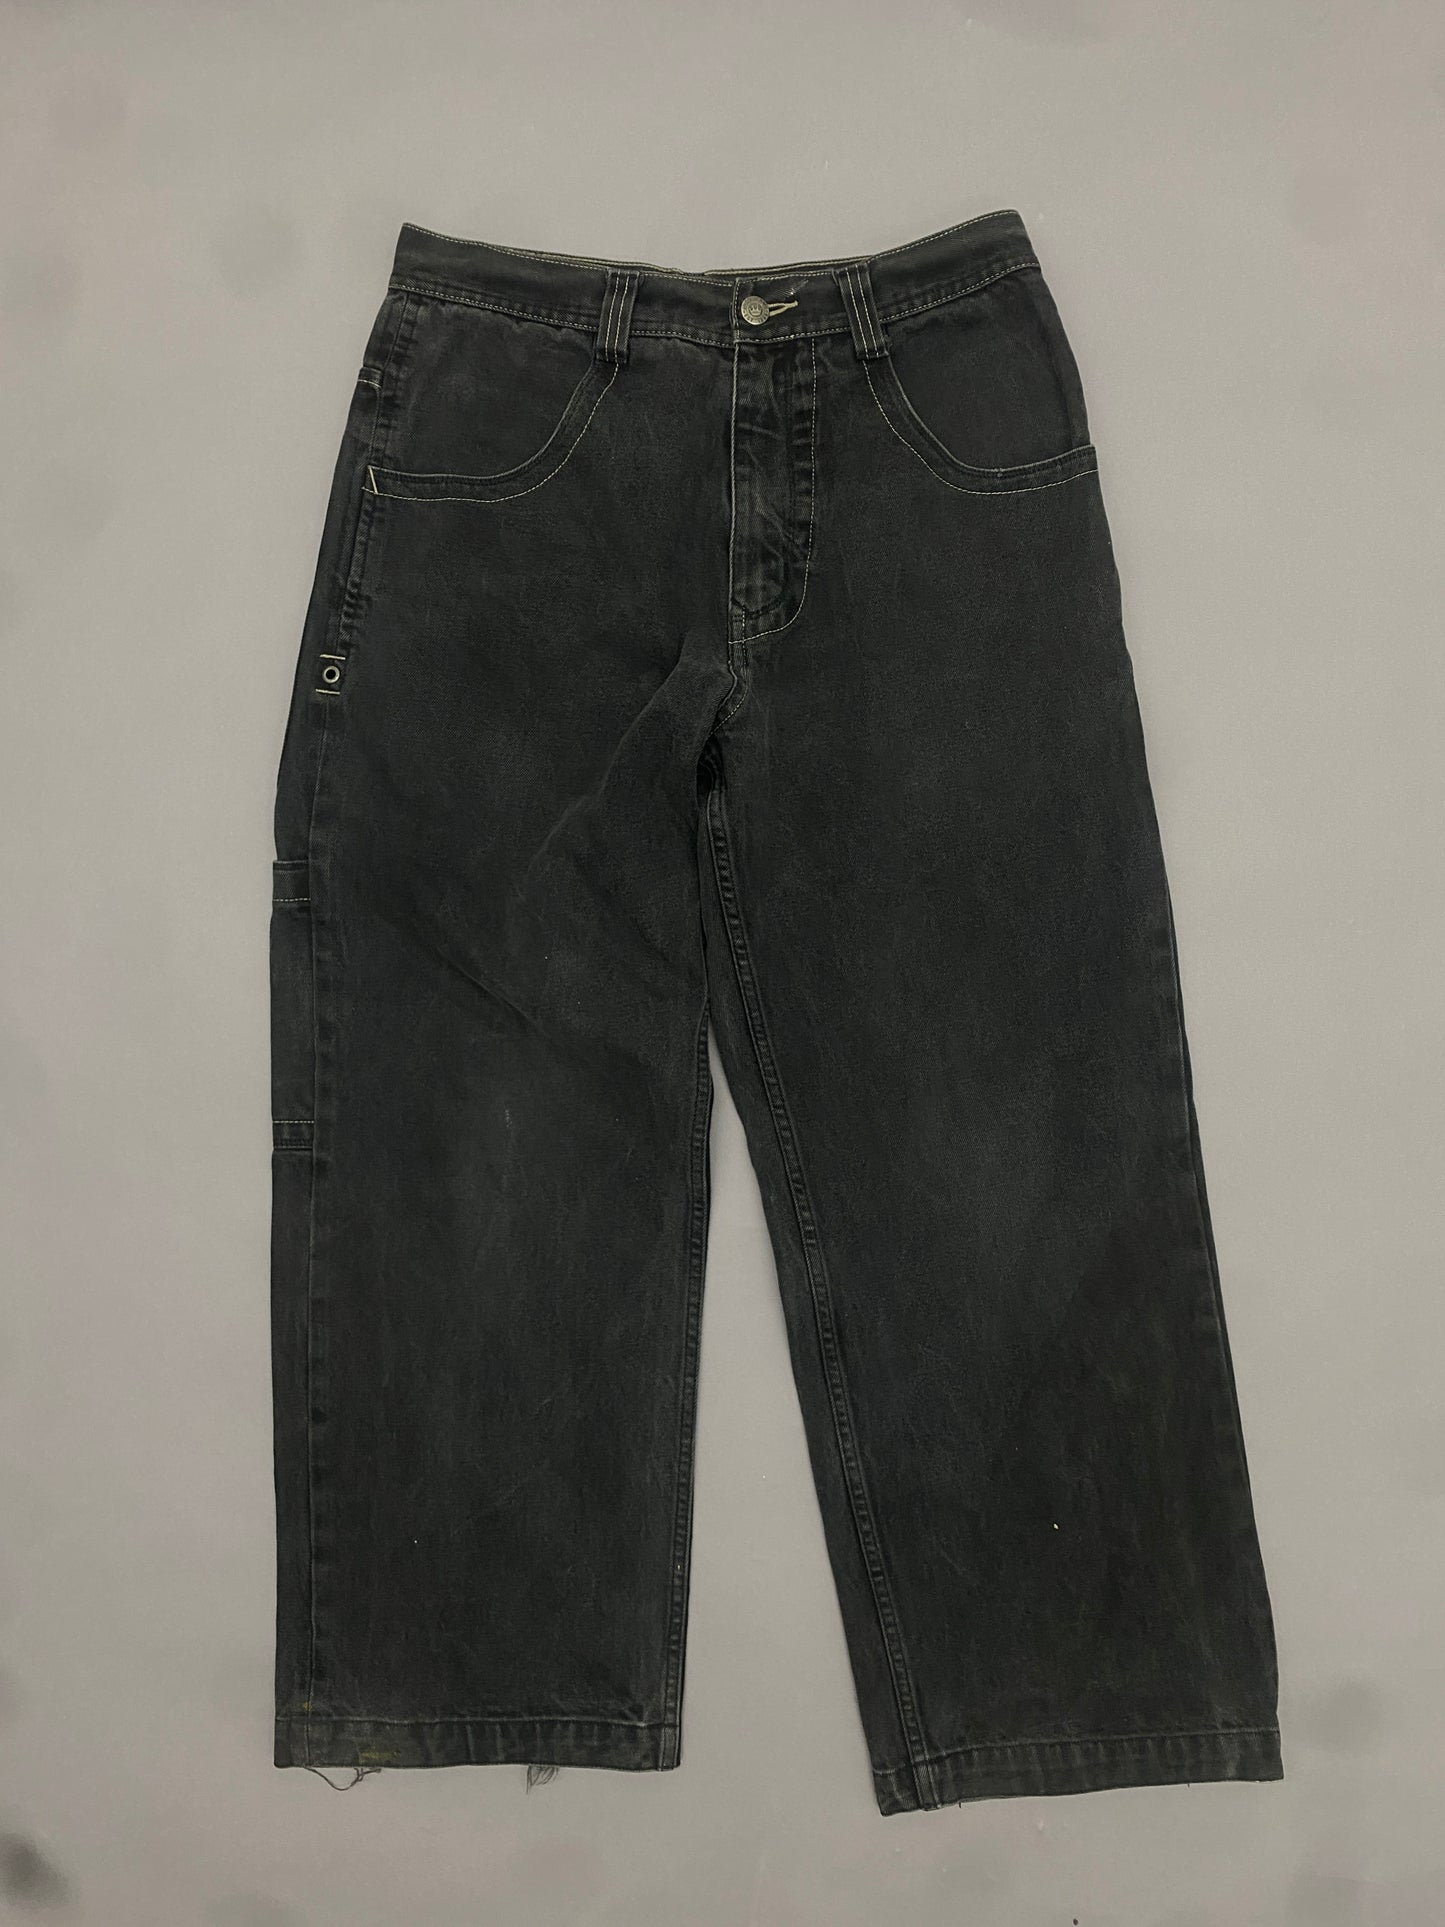 JNCO Flame Skull Vintage Jeans - 33x30